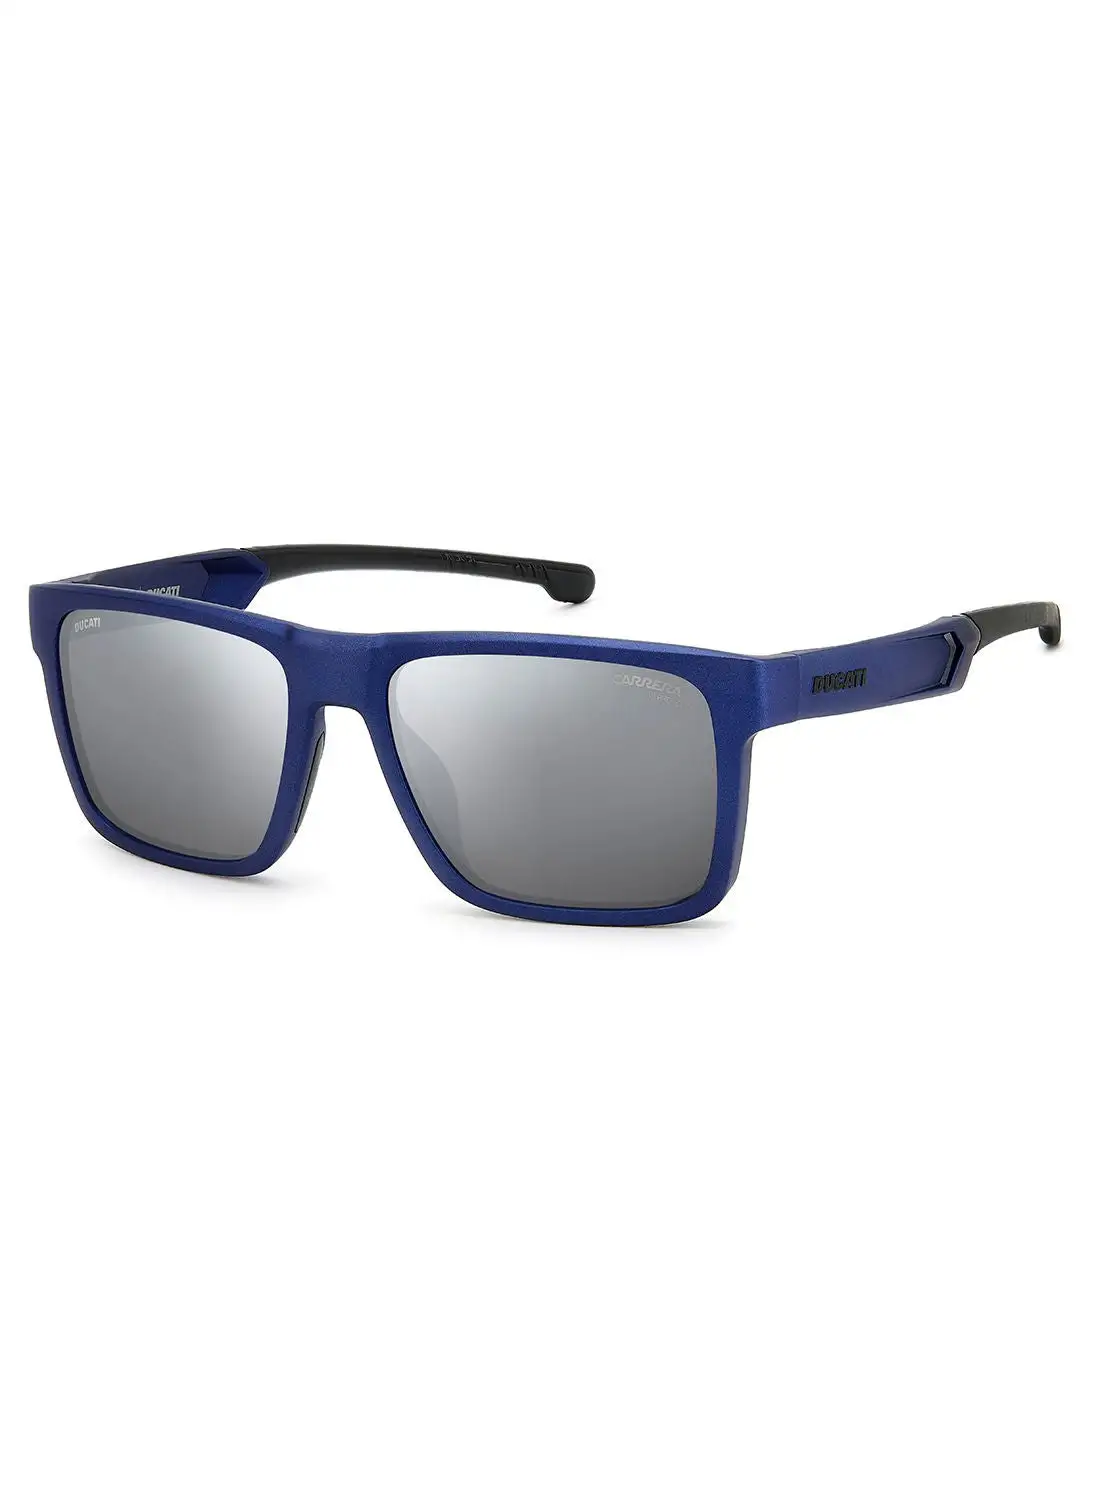 Carrera Men's UV Protection Rectangular Sunglasses - Carduc 021/S Bluemetal 55 - Lens Size: 55 Mm